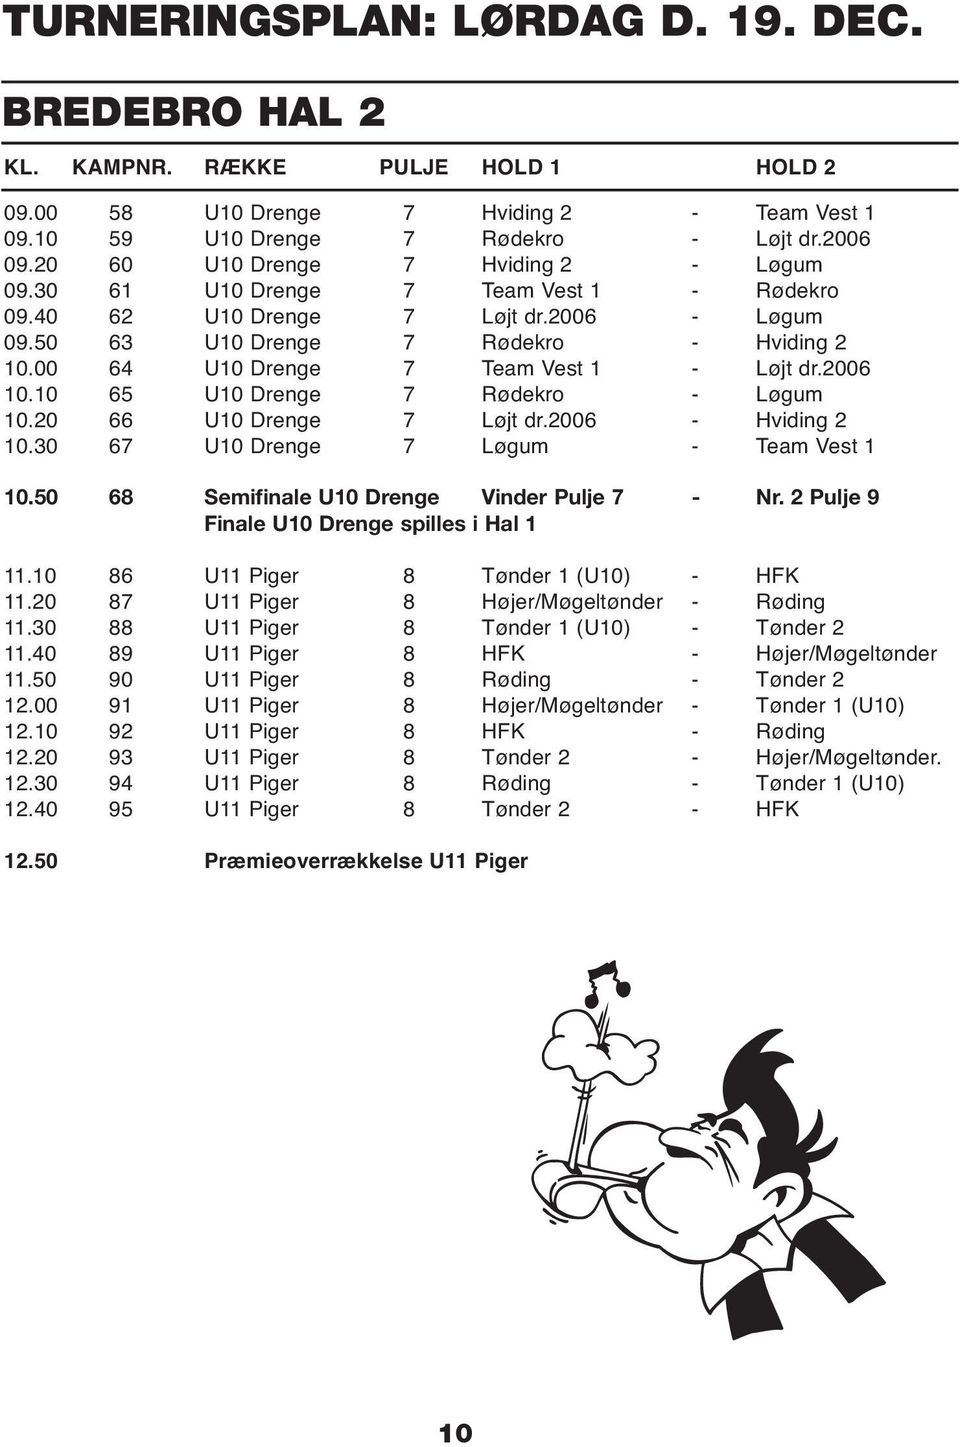 10 65 U10 Drenge 7 Rødekro - Løgum 10.20 66 U10 Drenge 7 Løjt dr.2006 - Hviding 2 10.30 67 U10 Drenge 7 Løgum - Team Vest 1 10.50 68 Semifinale U10 Drenge Vinder Pulje 7 - Nr.